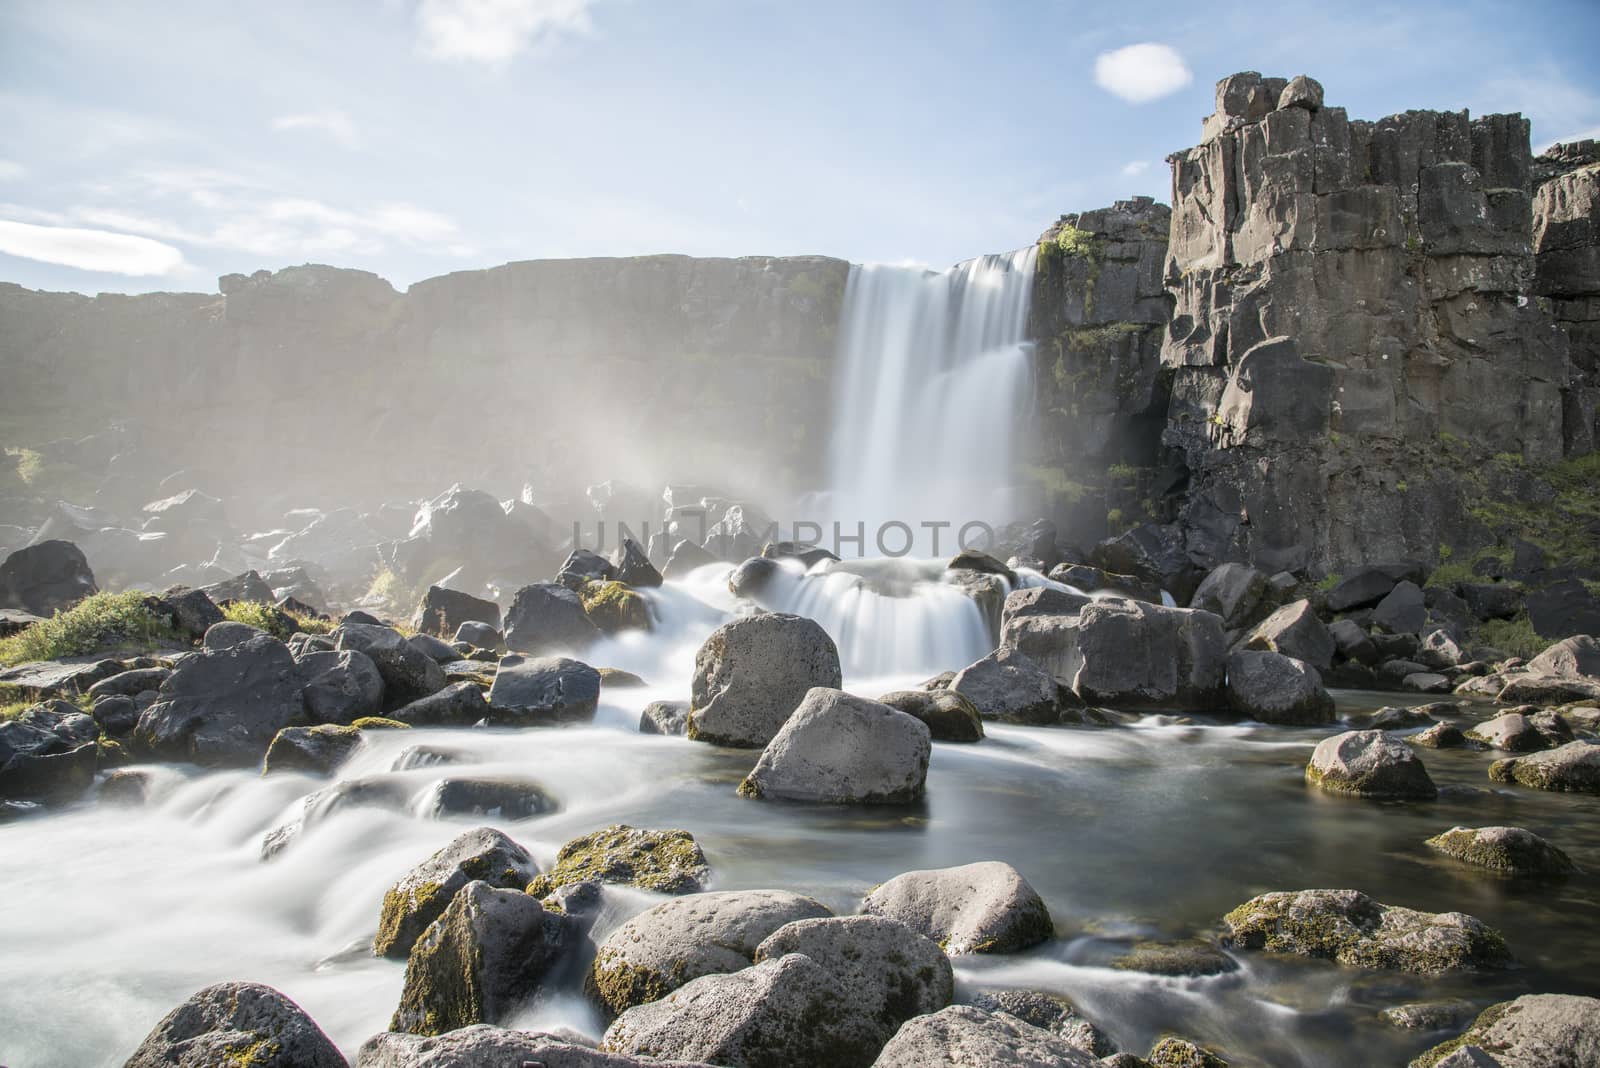 Öxarárfoss Waterfall in Þingvellir National Park, Reykjanes Peninsula, Iceland